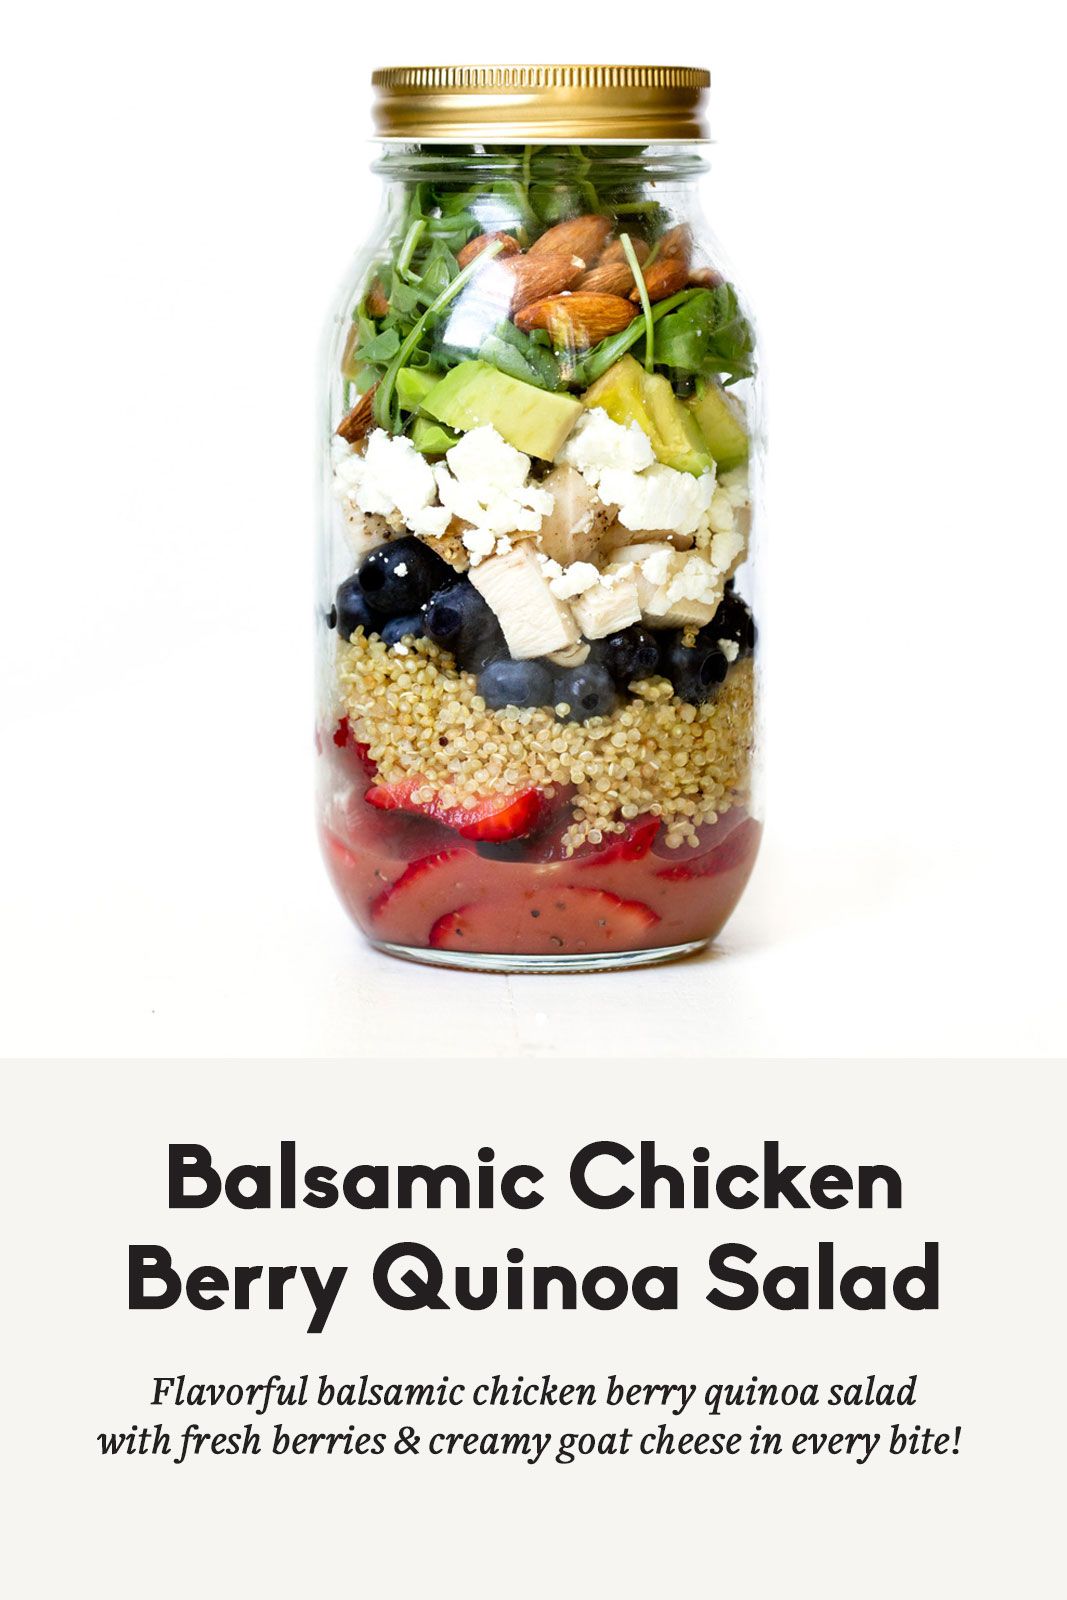 Balsamic Chicken Berry and Quinoa Salad